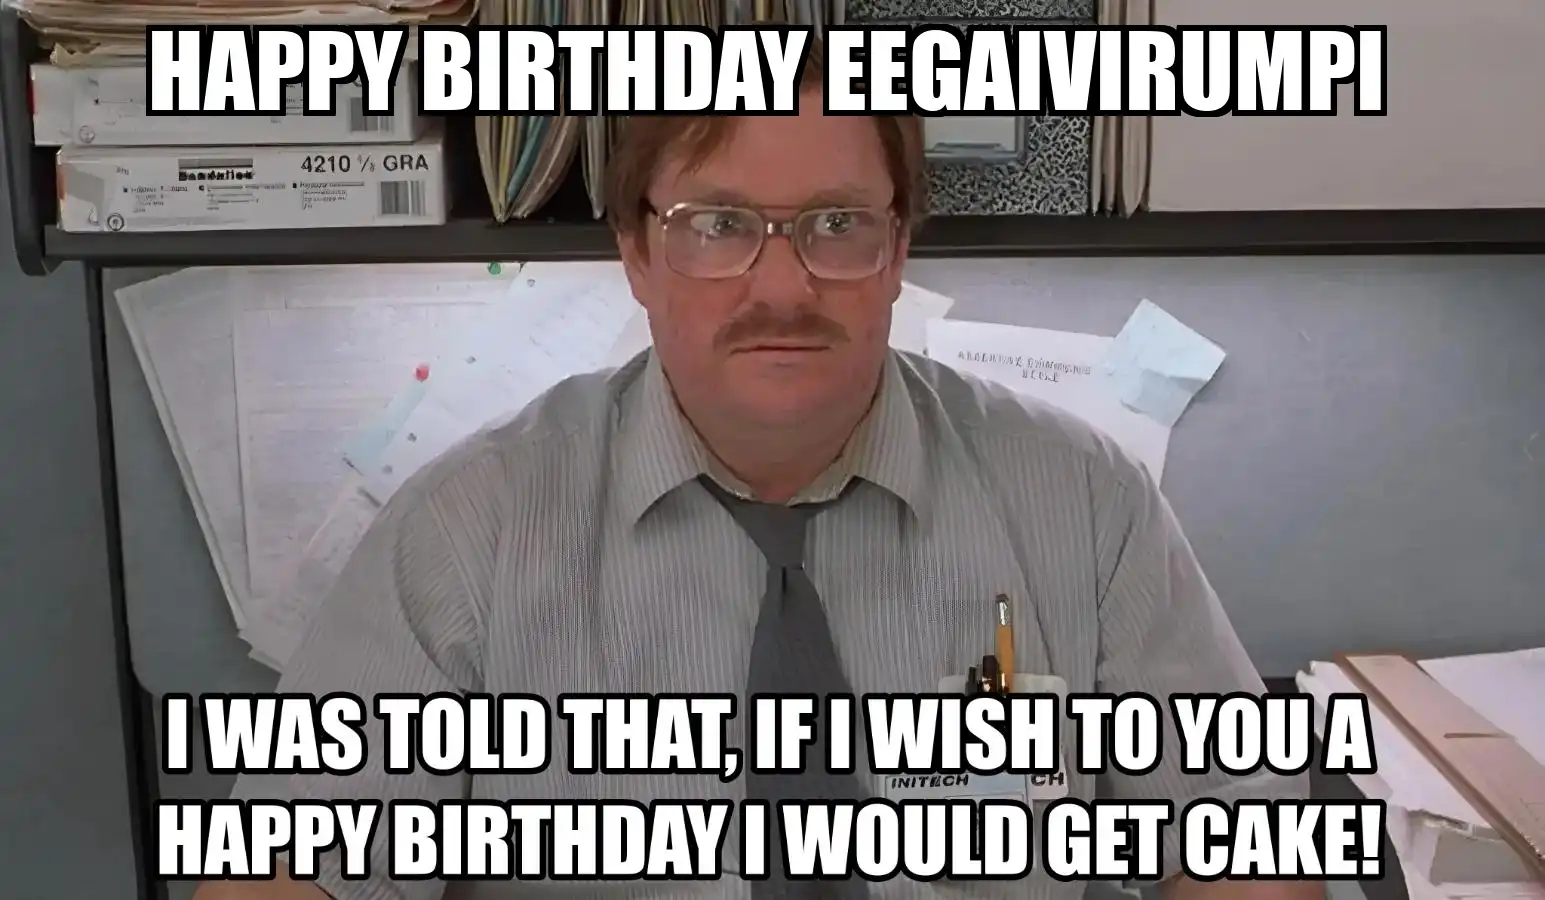 Happy Birthday Eegaivirumpi I Would Get A Cake Meme